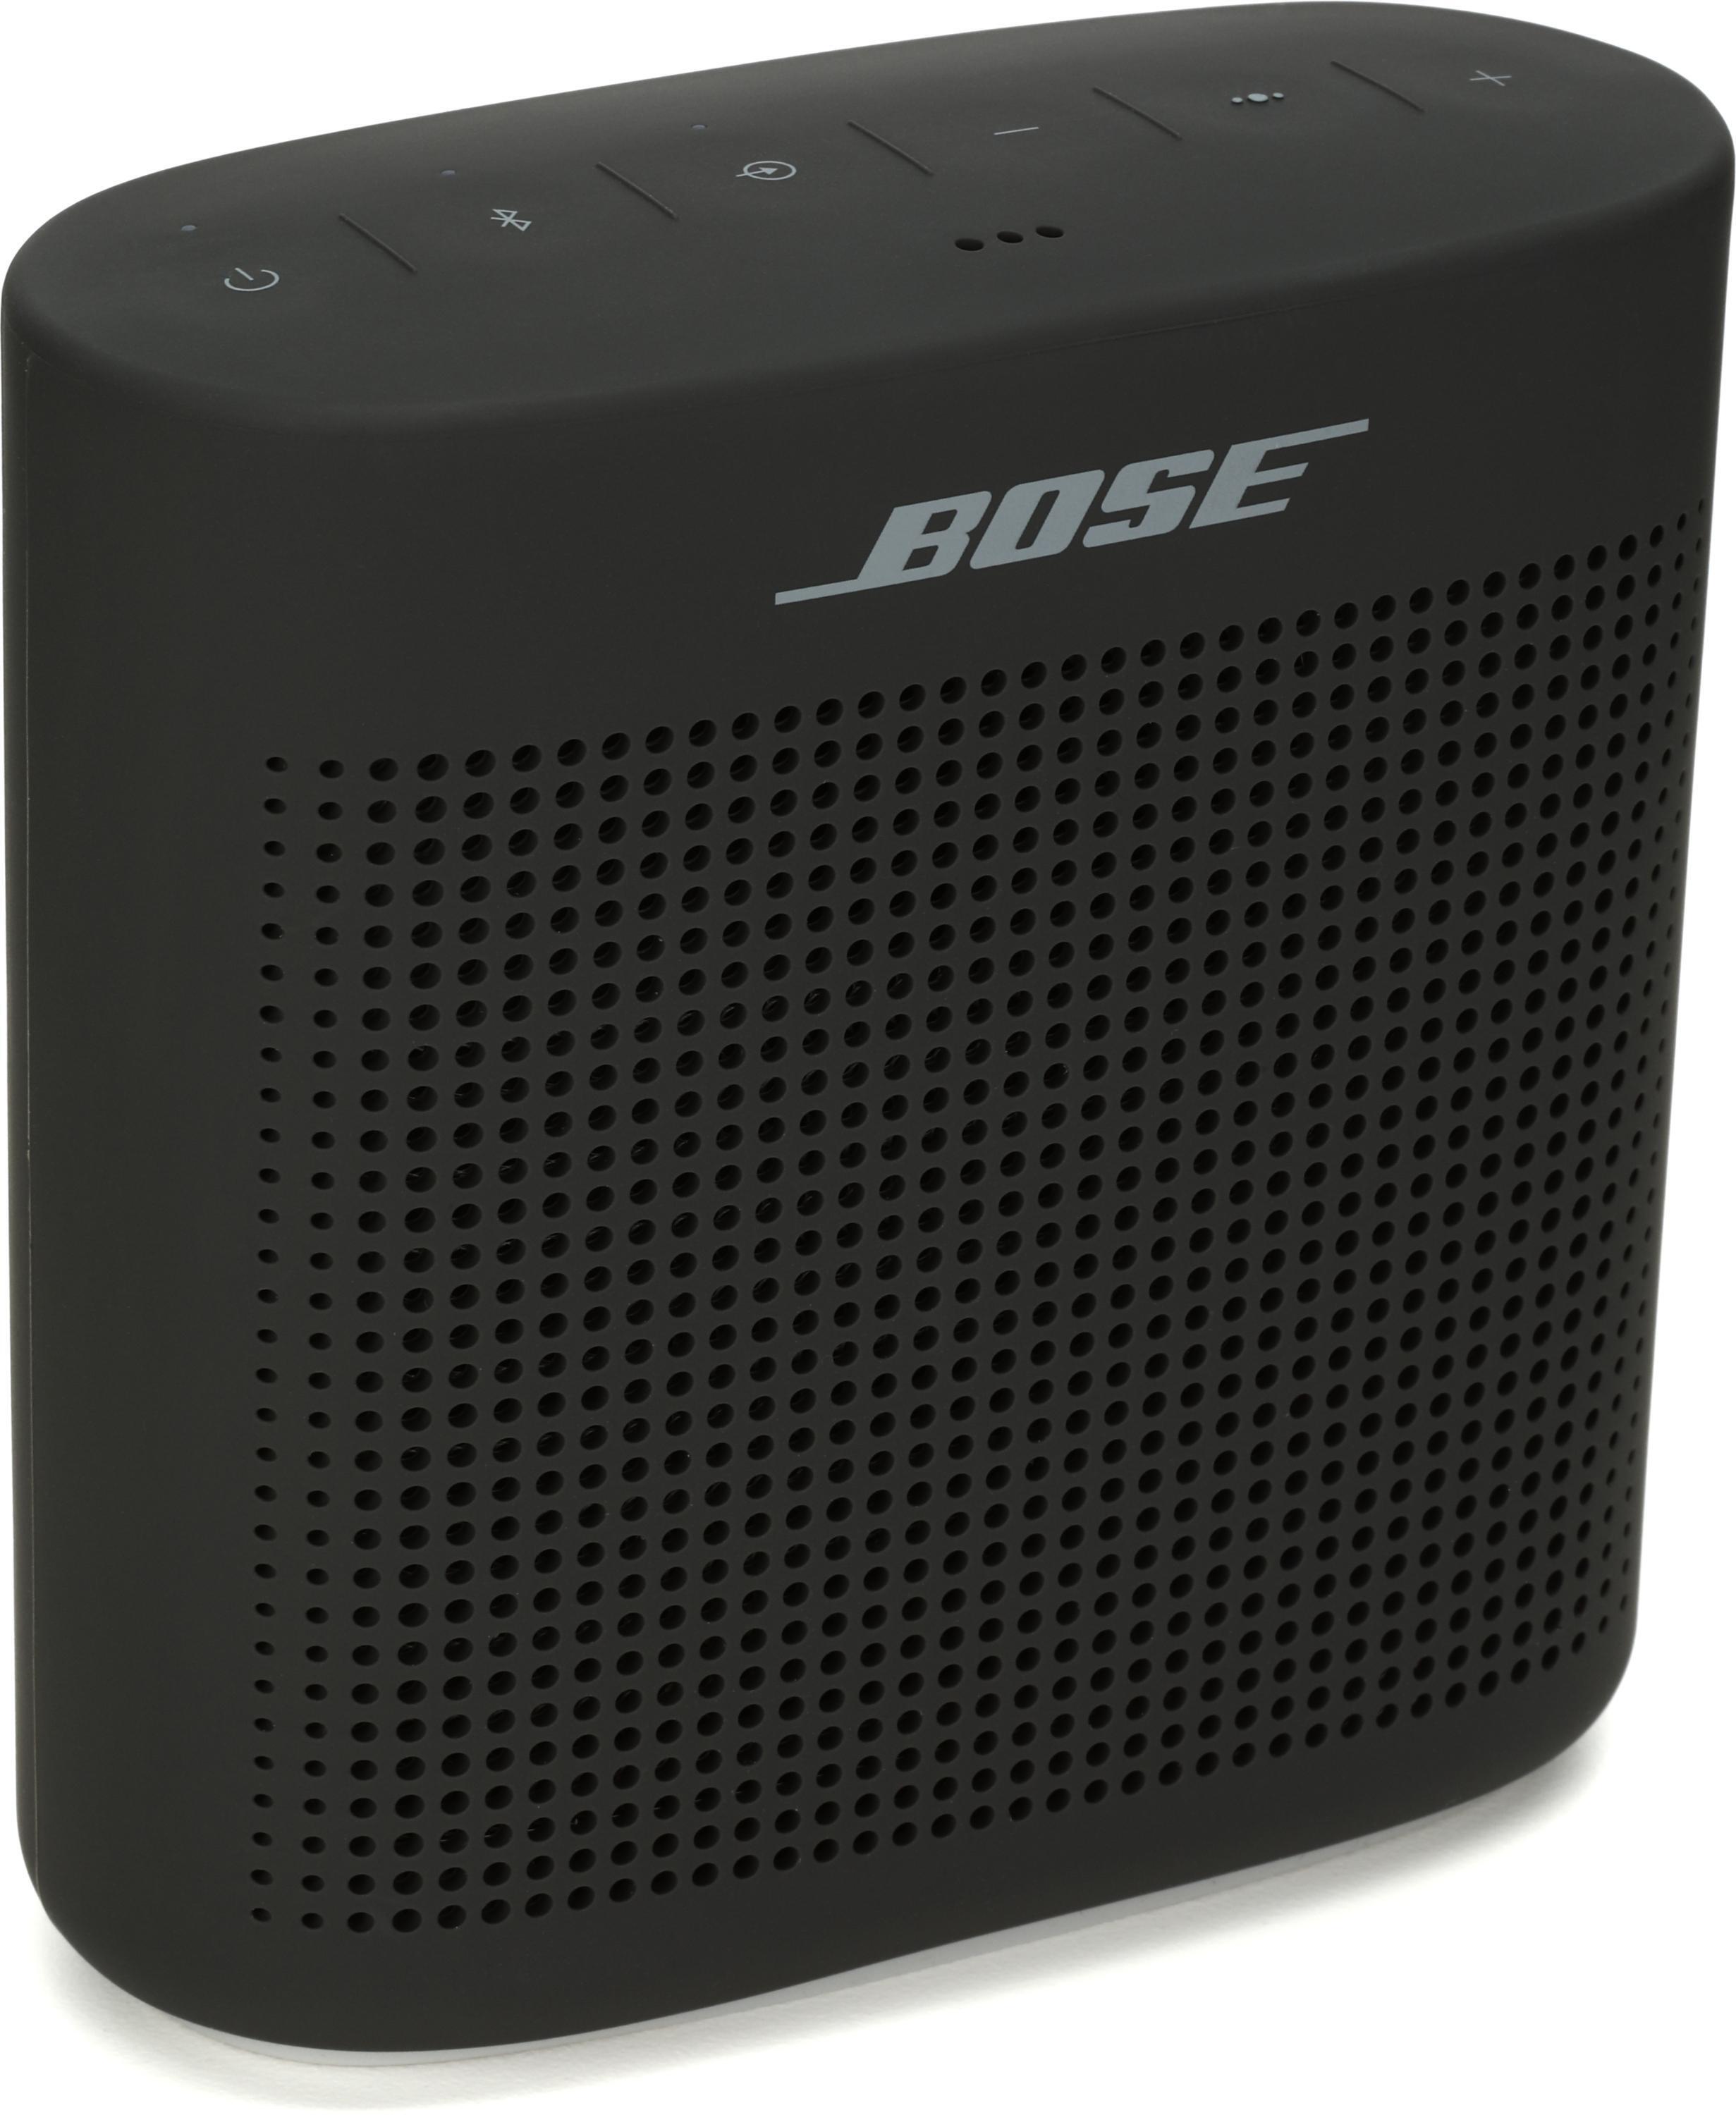 Bose SoundLink Color specifications